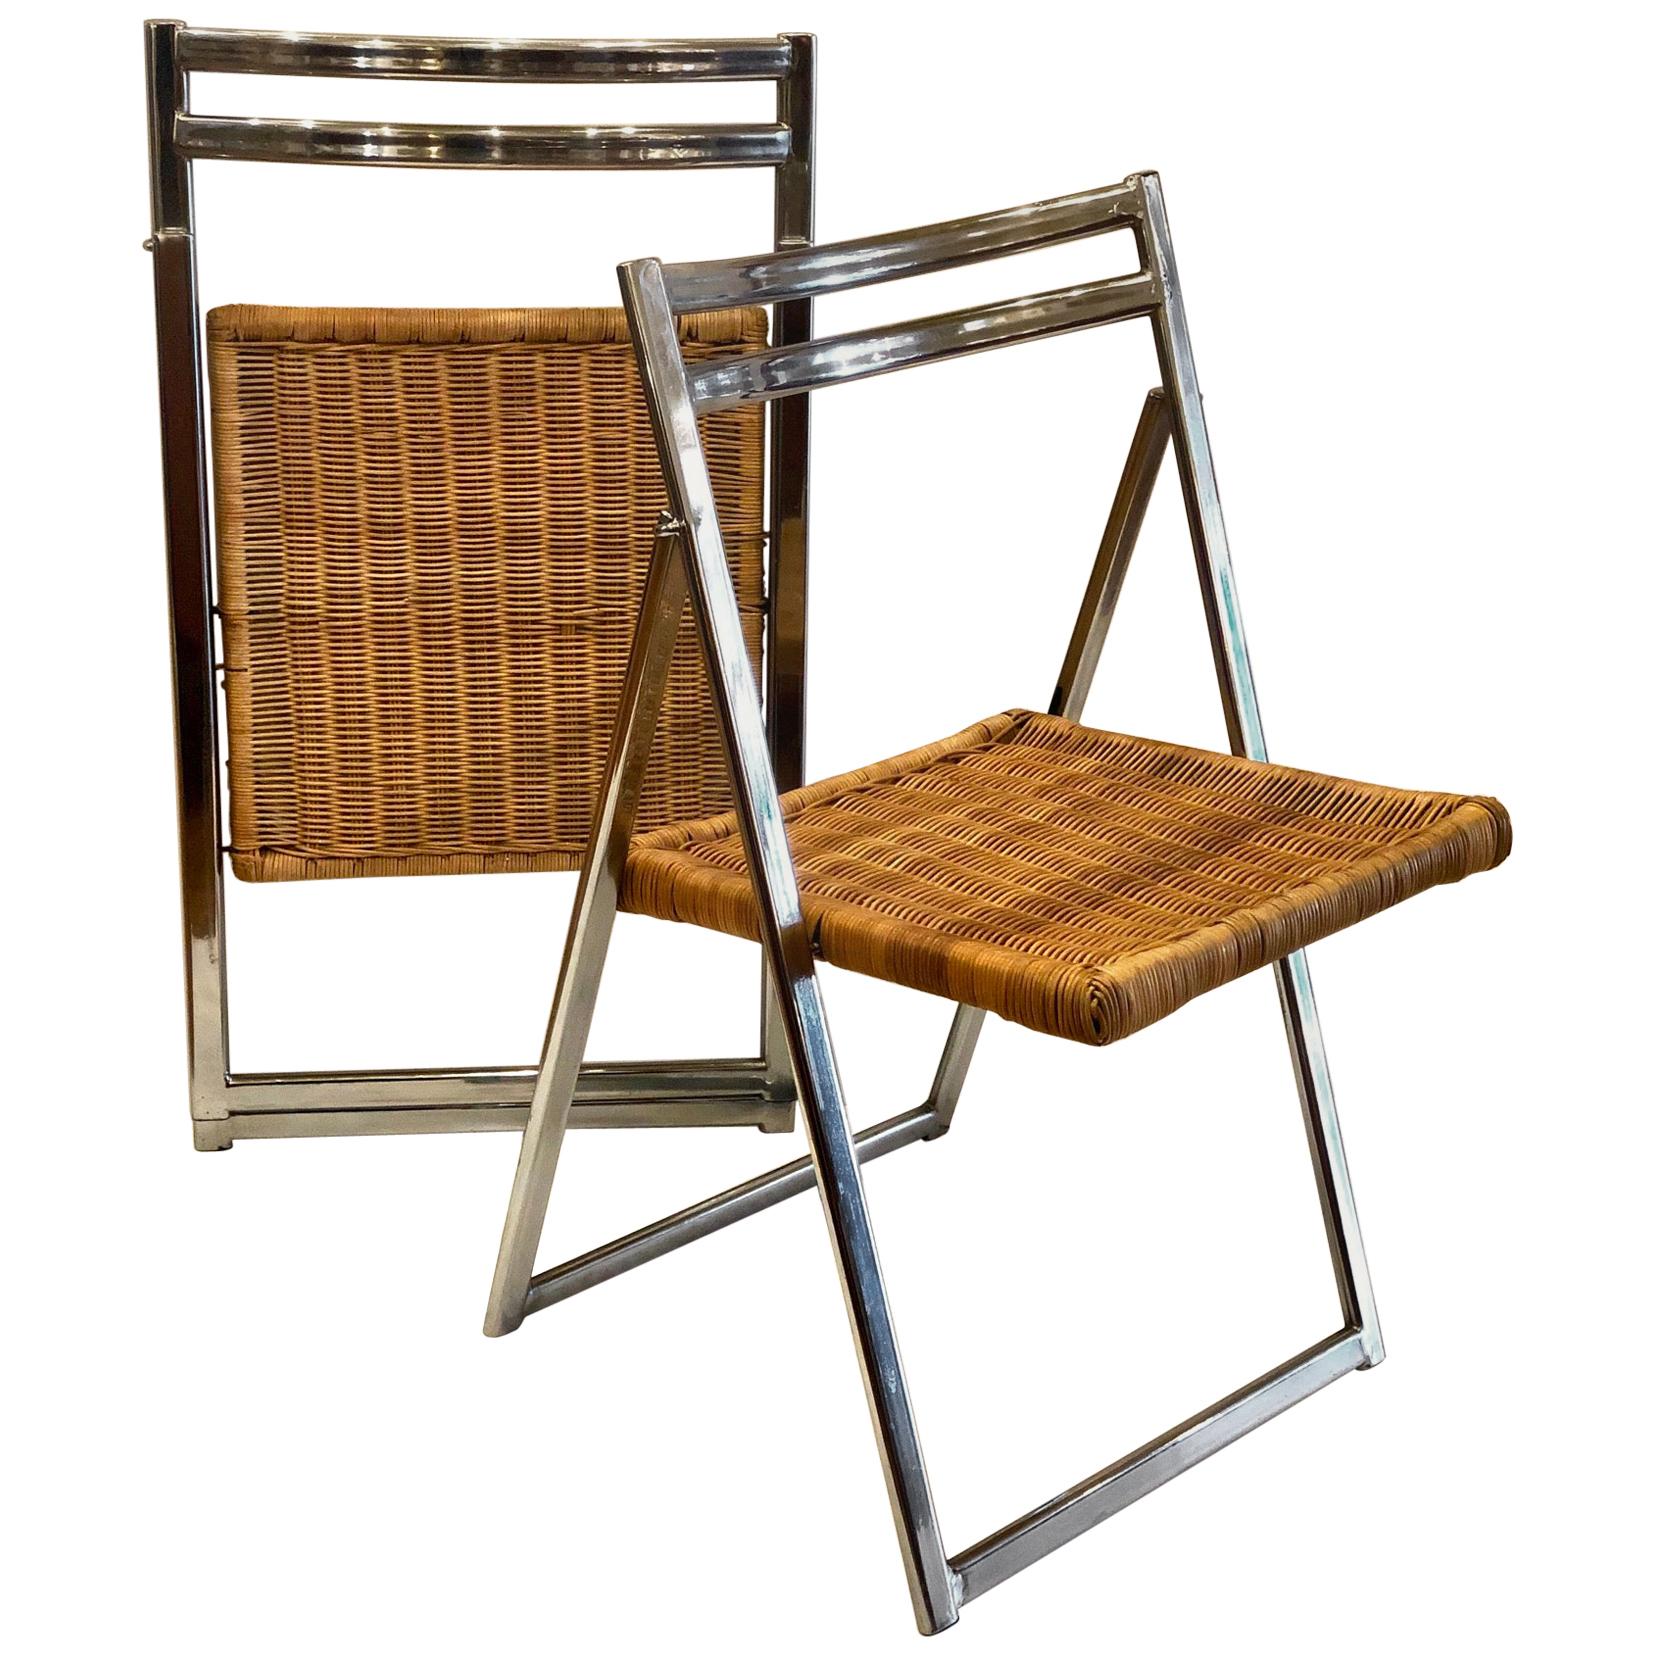 Italian Mid-Century Modern Pair of Folding Chairs in Chrome & Wicker